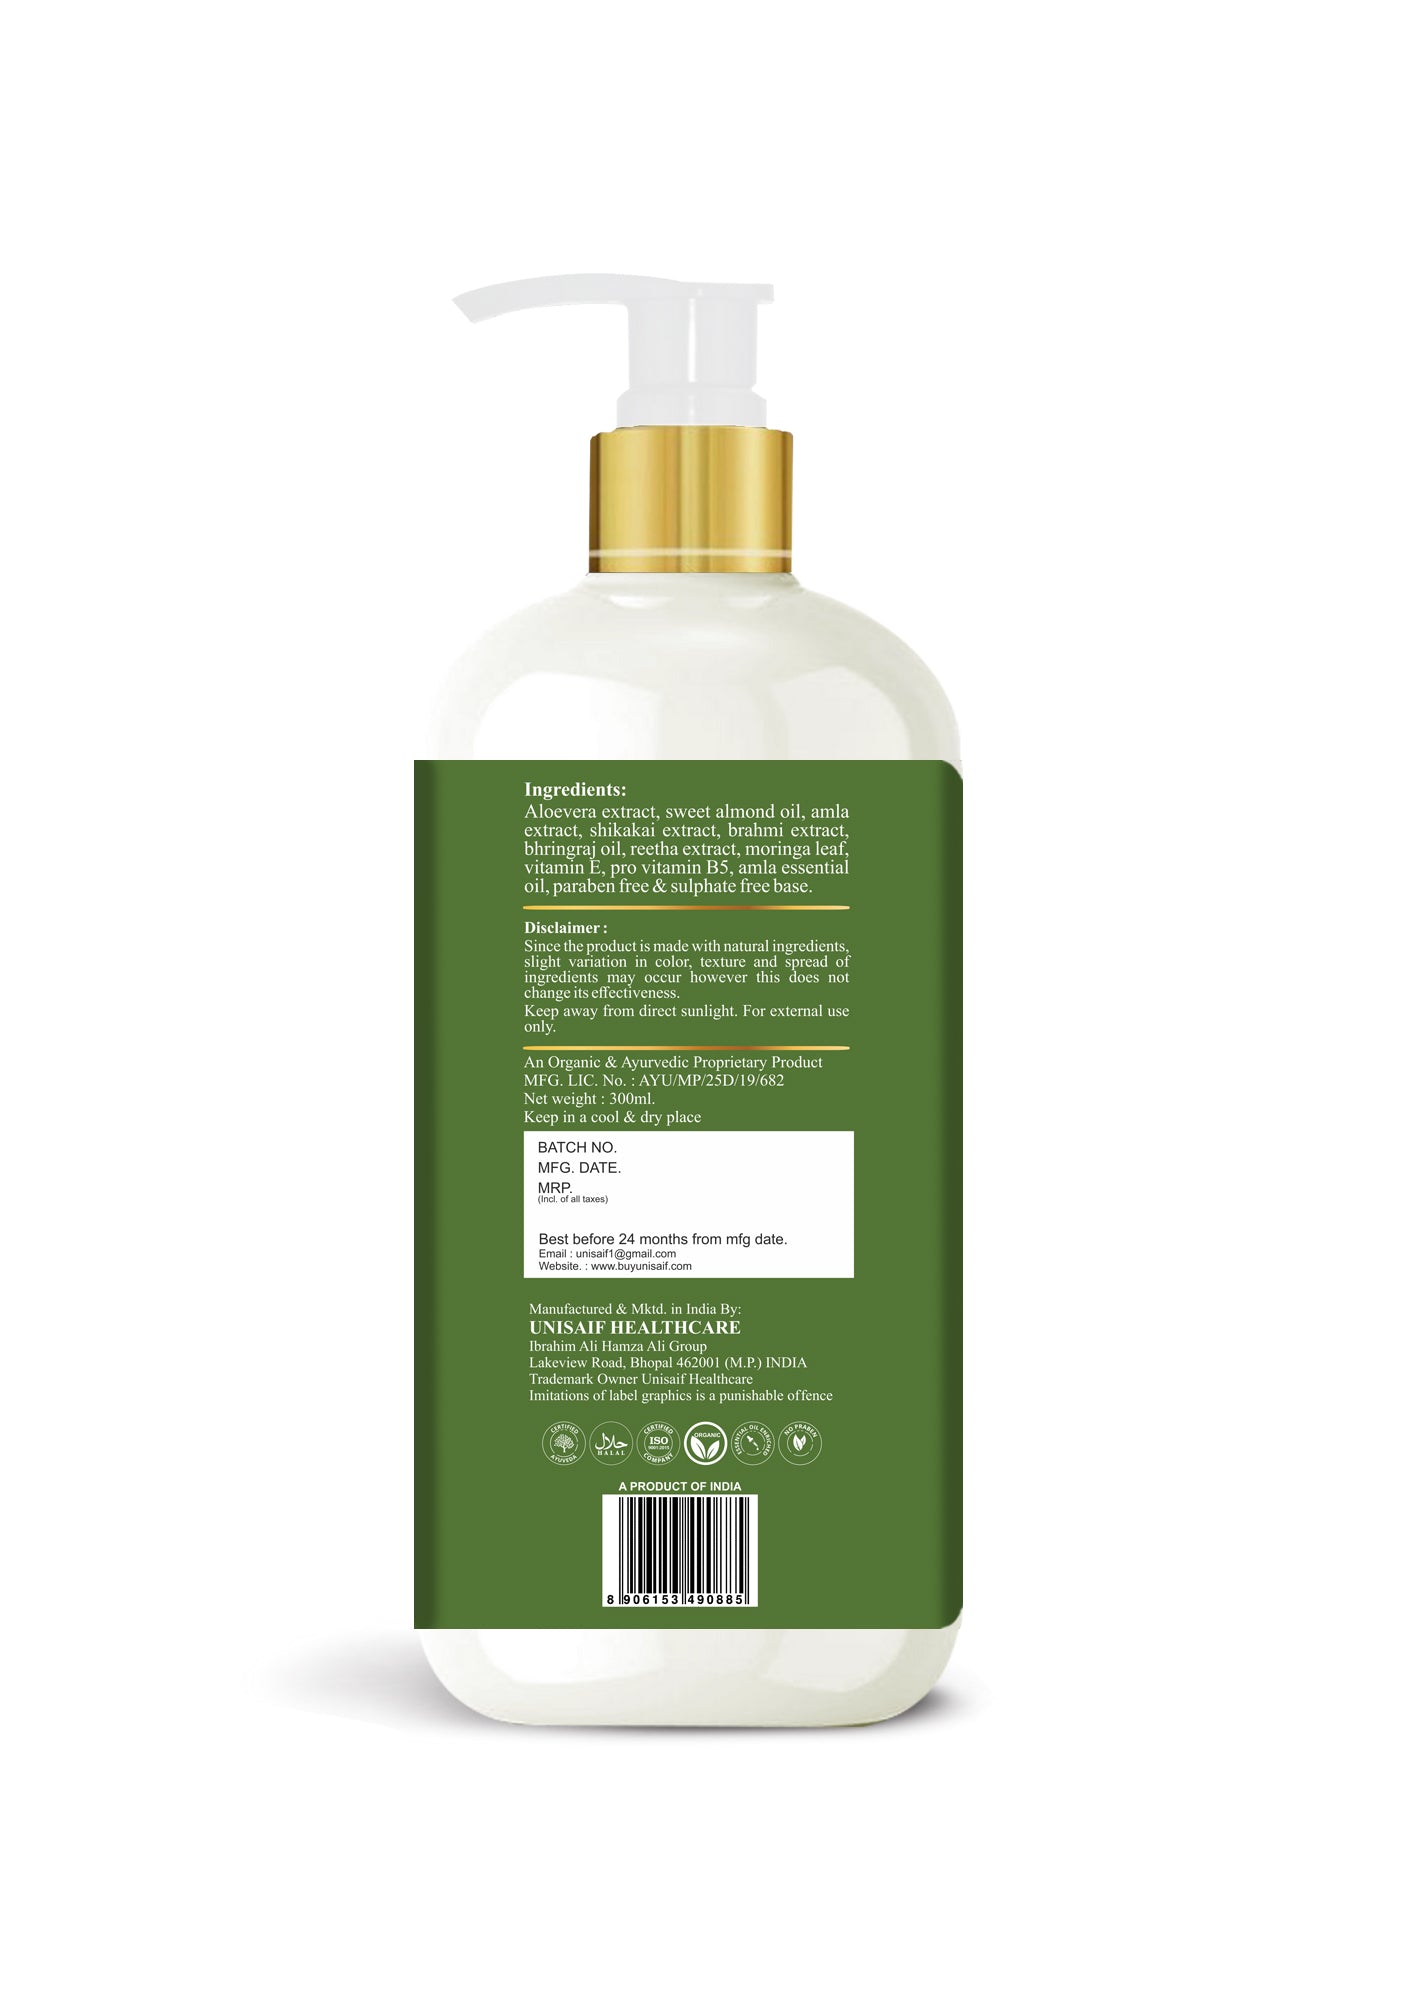 Amla Shikakai Organic Shampoo (300ml) With Natural Extract Of Brahmi & Bhringraj | Restores Shine & Texture| Hair growth| NO SULPHATE NO PARABEN